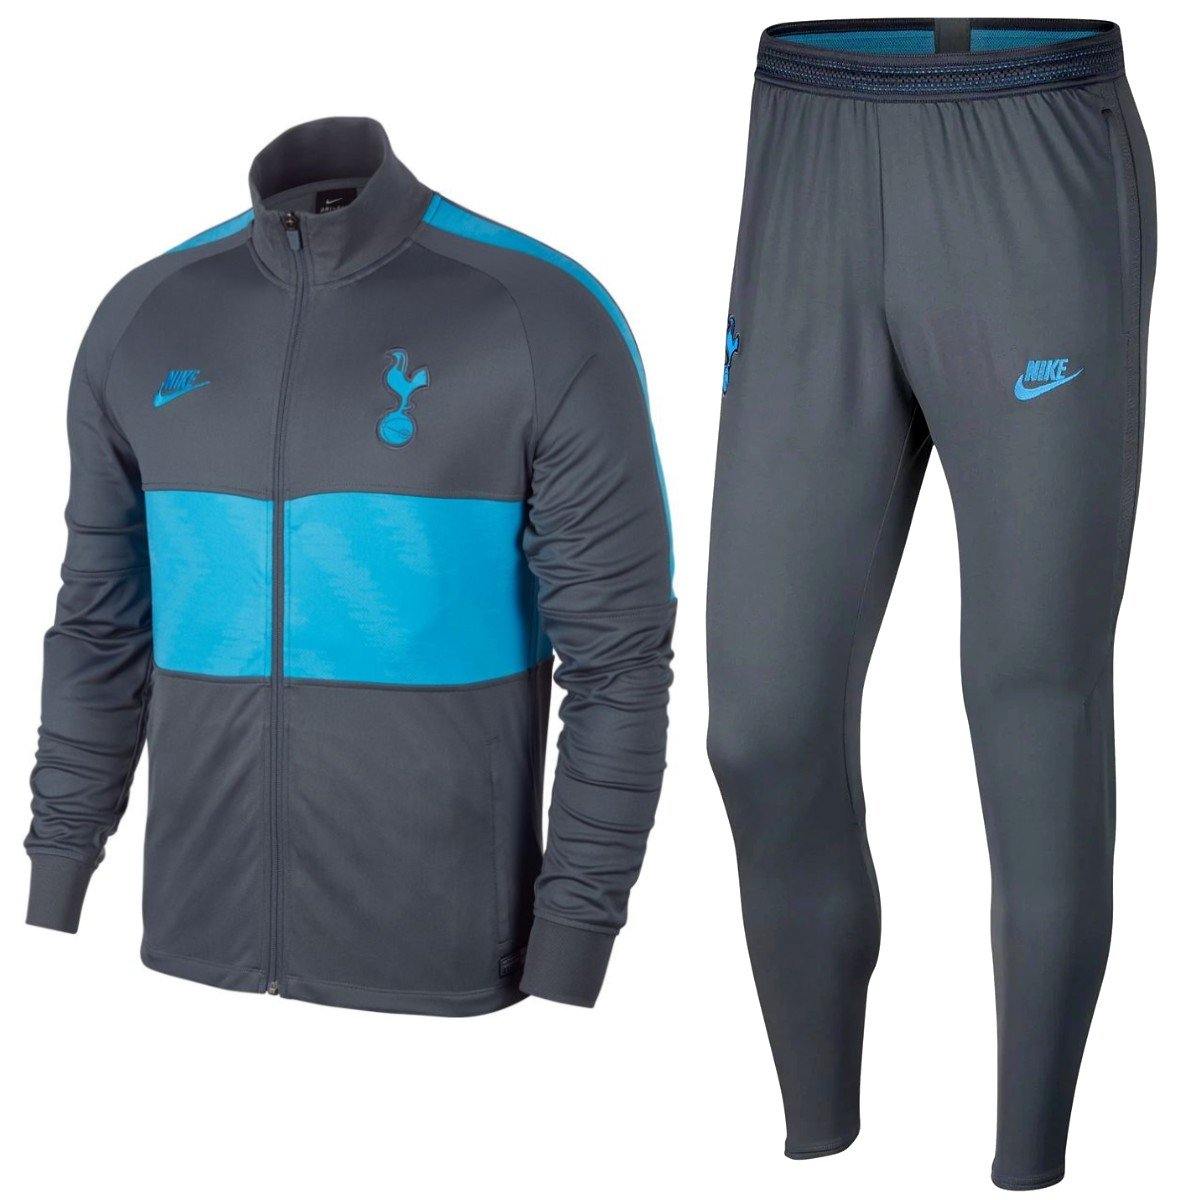 Nike Tottenham Hotspur Pre-Match Football Training Jersey Size M 2019/2020